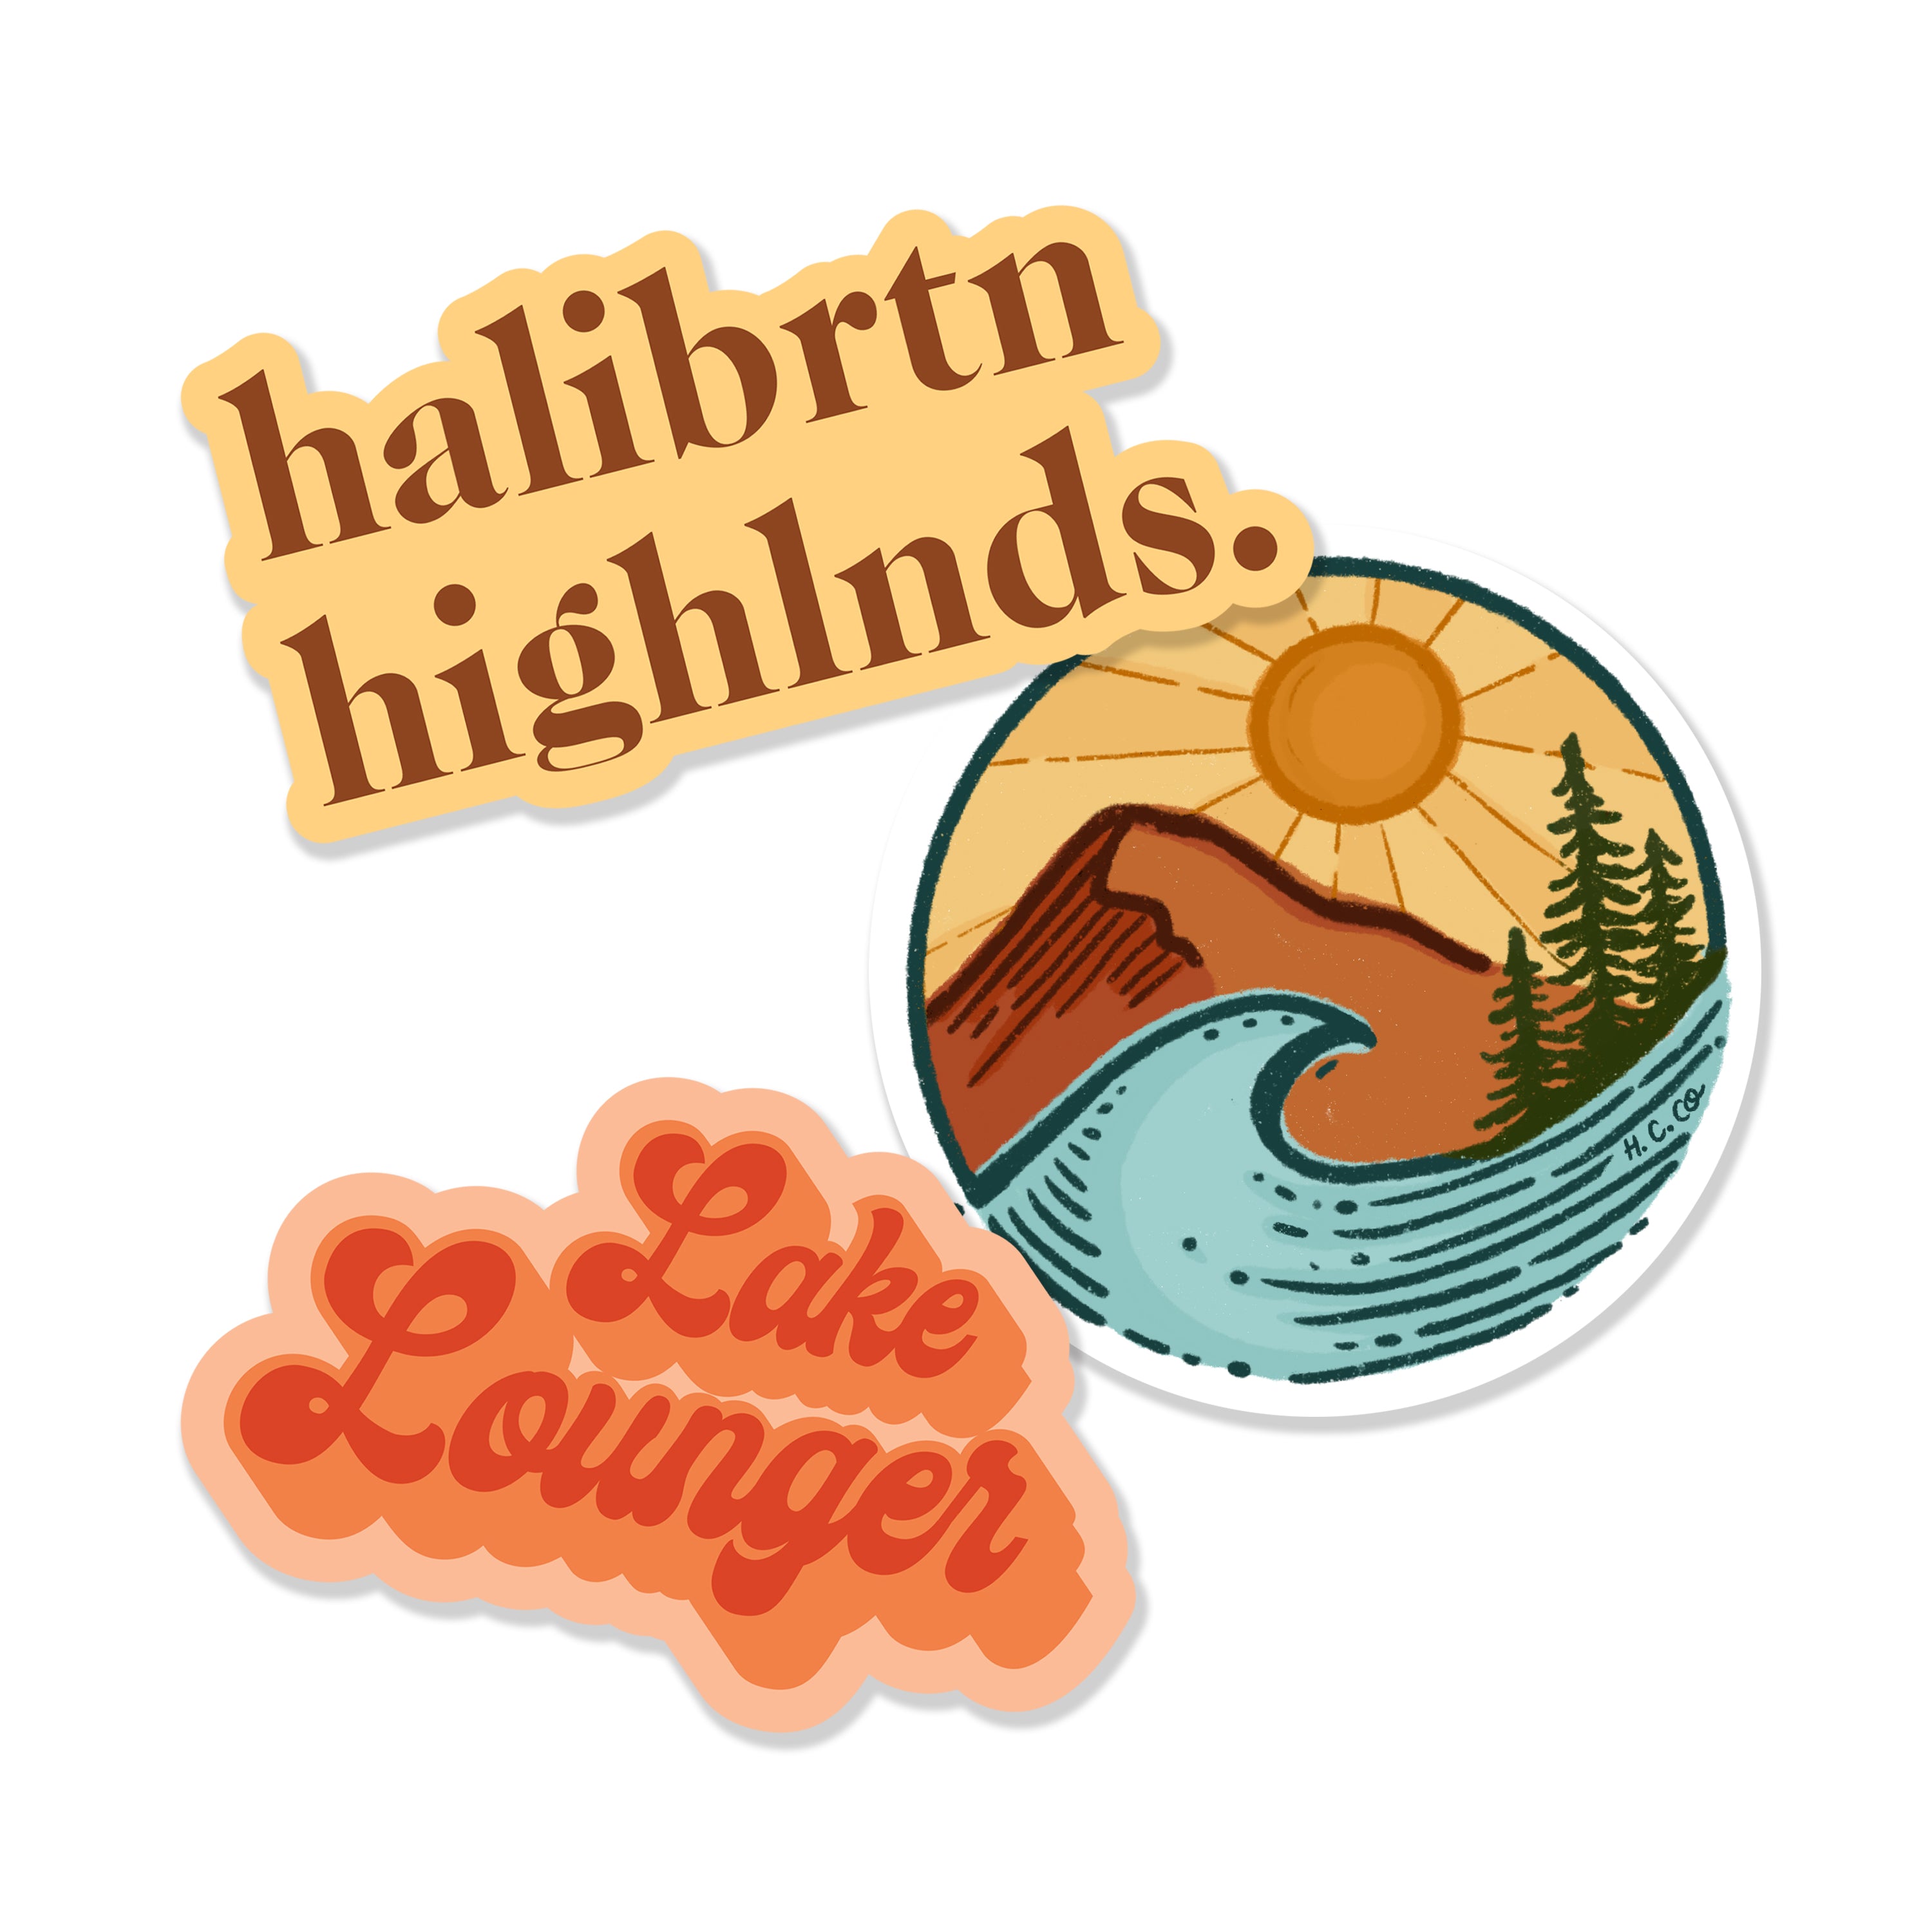 Highlands Sticker Pack